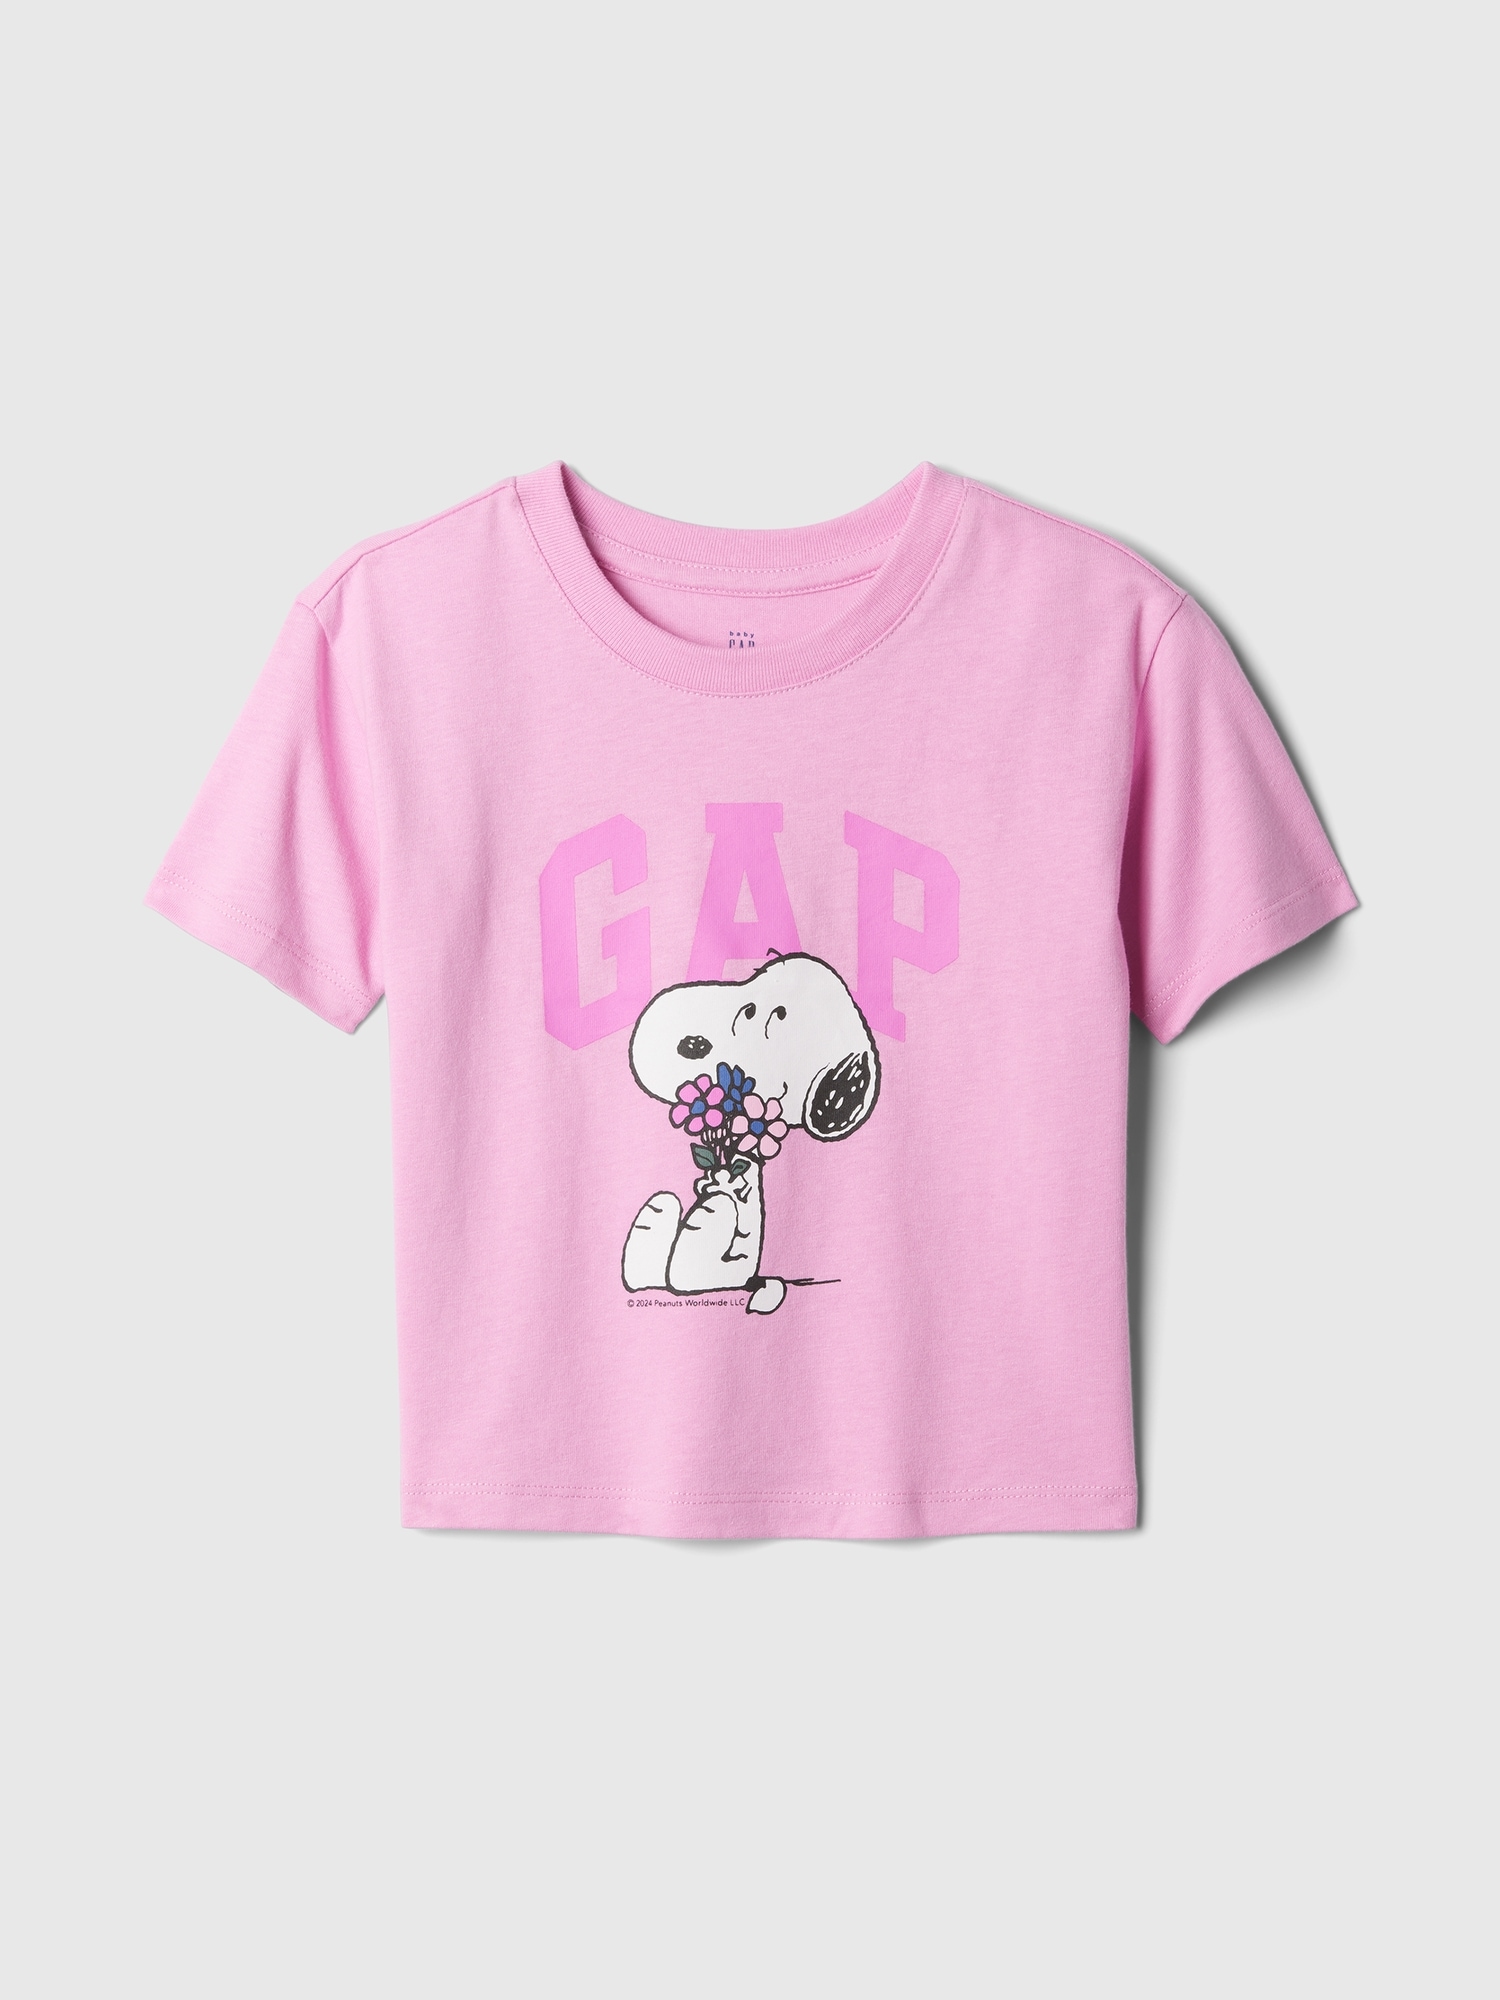 Babygap Gapロゴ「ピーナッツ」グラフィックtシャツ